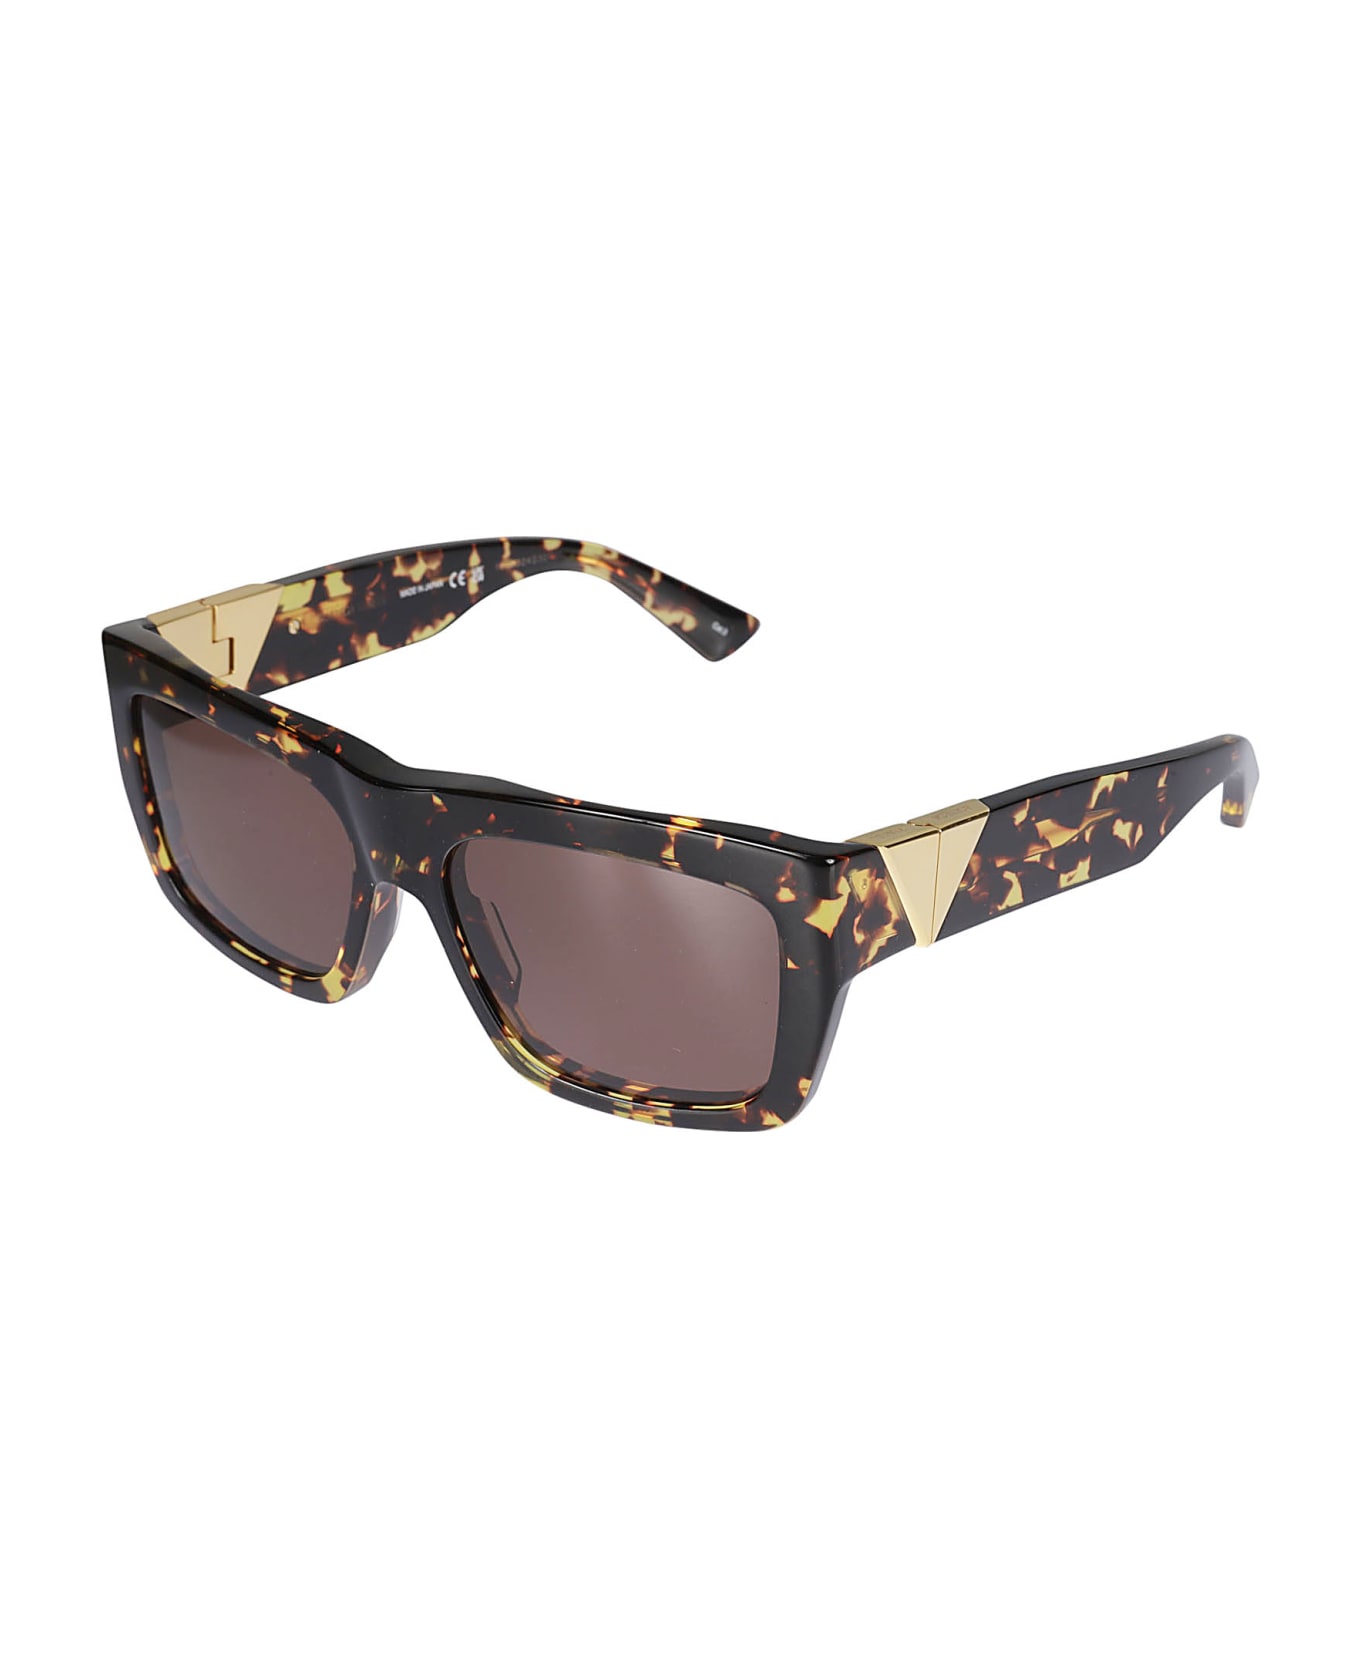 Bottega Veneta Eyewear Bold Rectangular Sunglasses - 002 havana havana brown サングラス